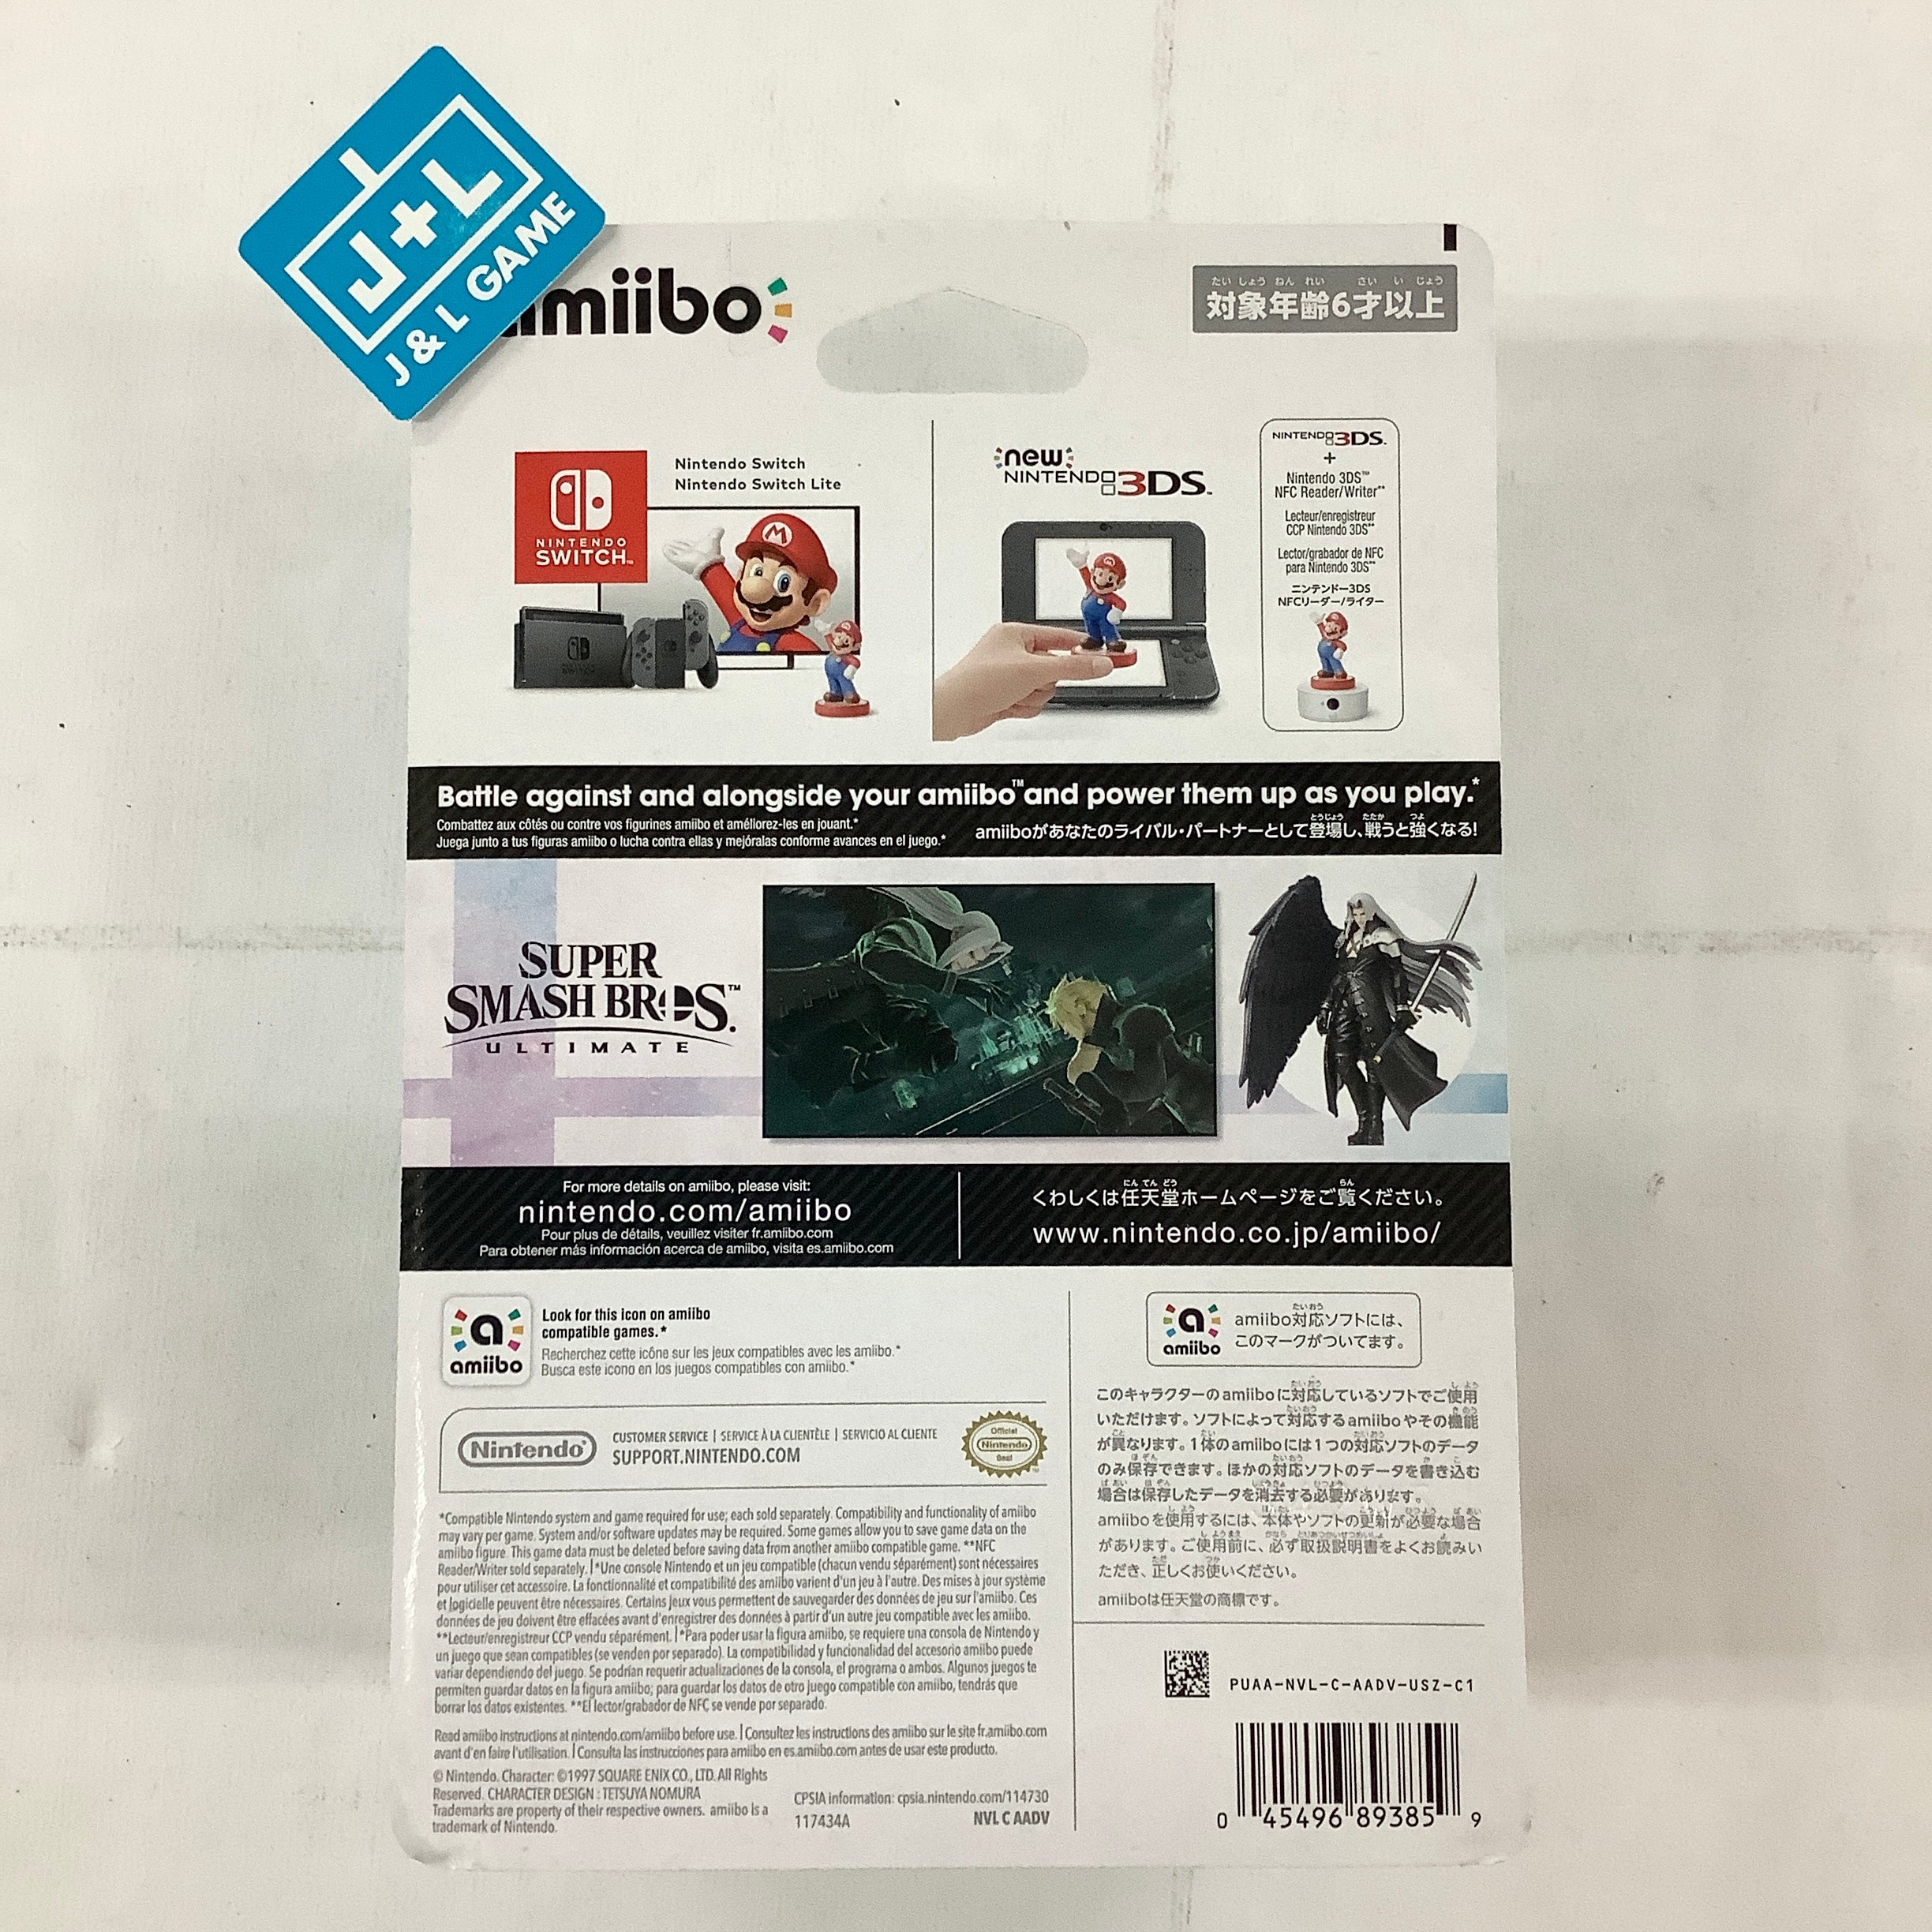 Sephiroth (Super Smash Bros. series) - (NSW) Nintendo Switch Amiibo Amiibo Nintendo   